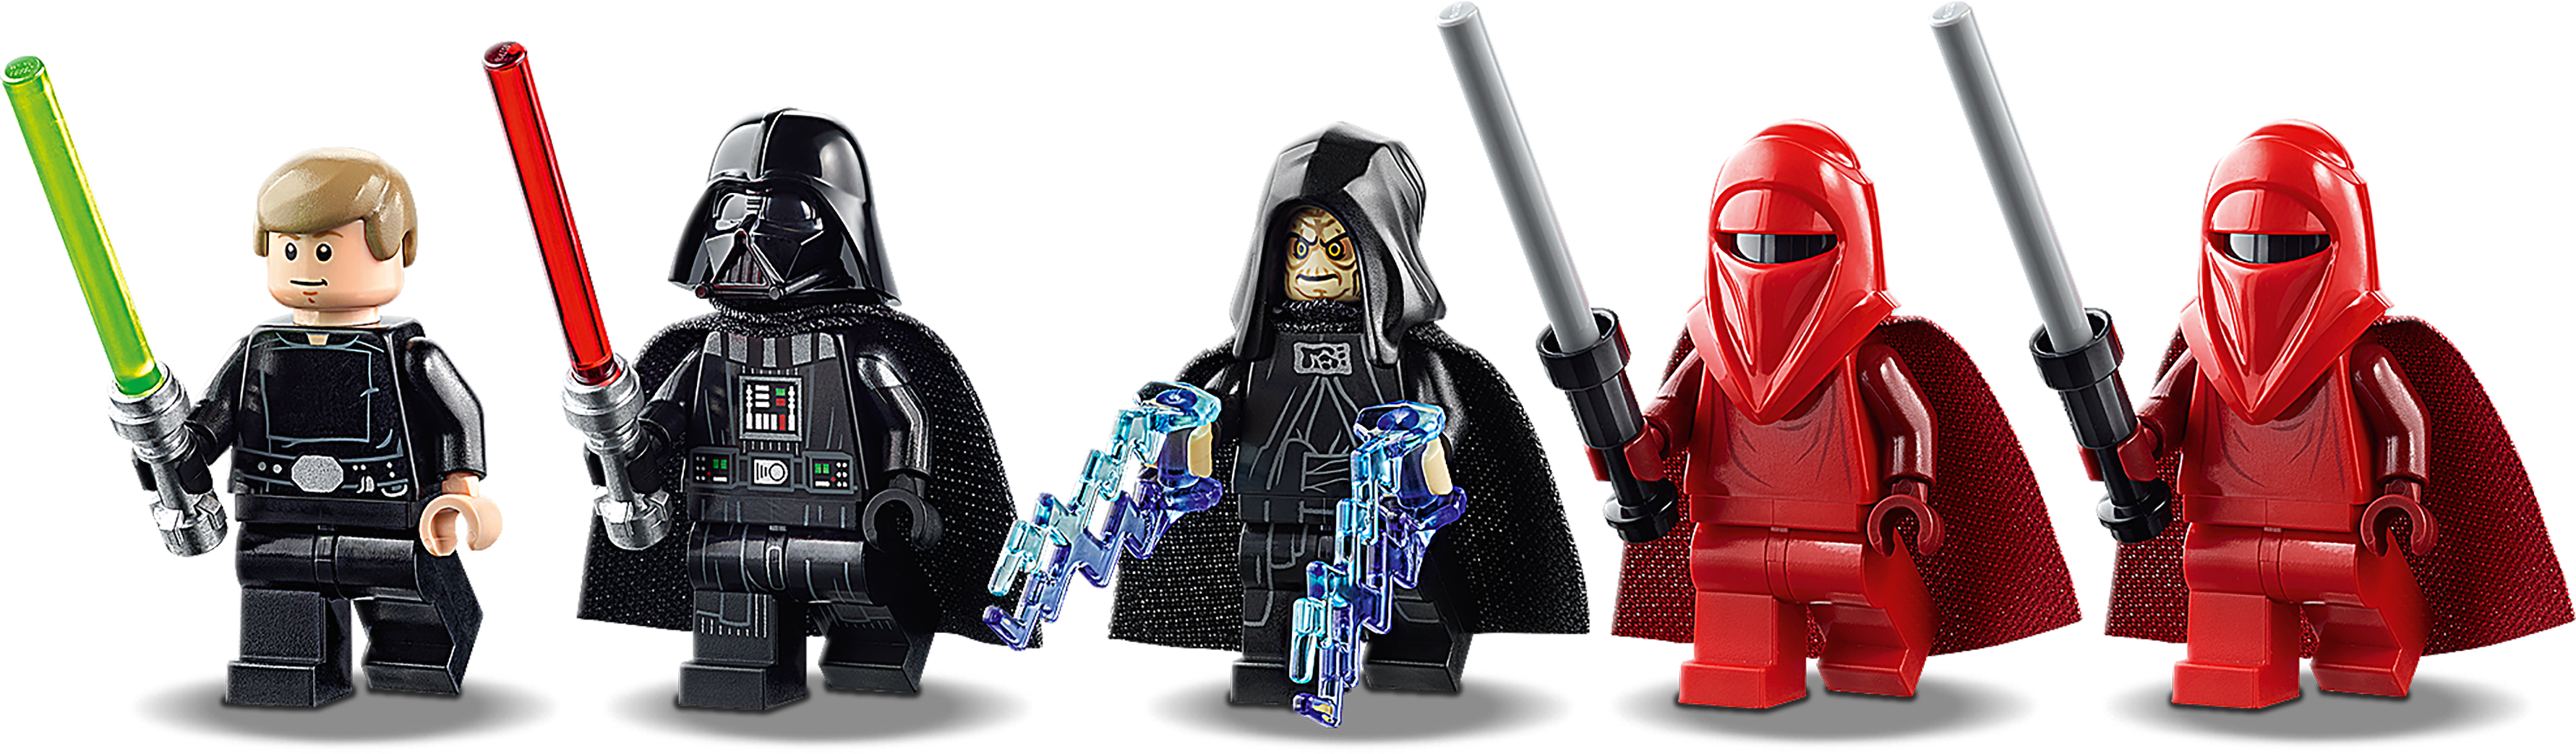 Lego Star Wars Emperor Palpatine Minifigure Death Star Final Duel 75291 NEW 